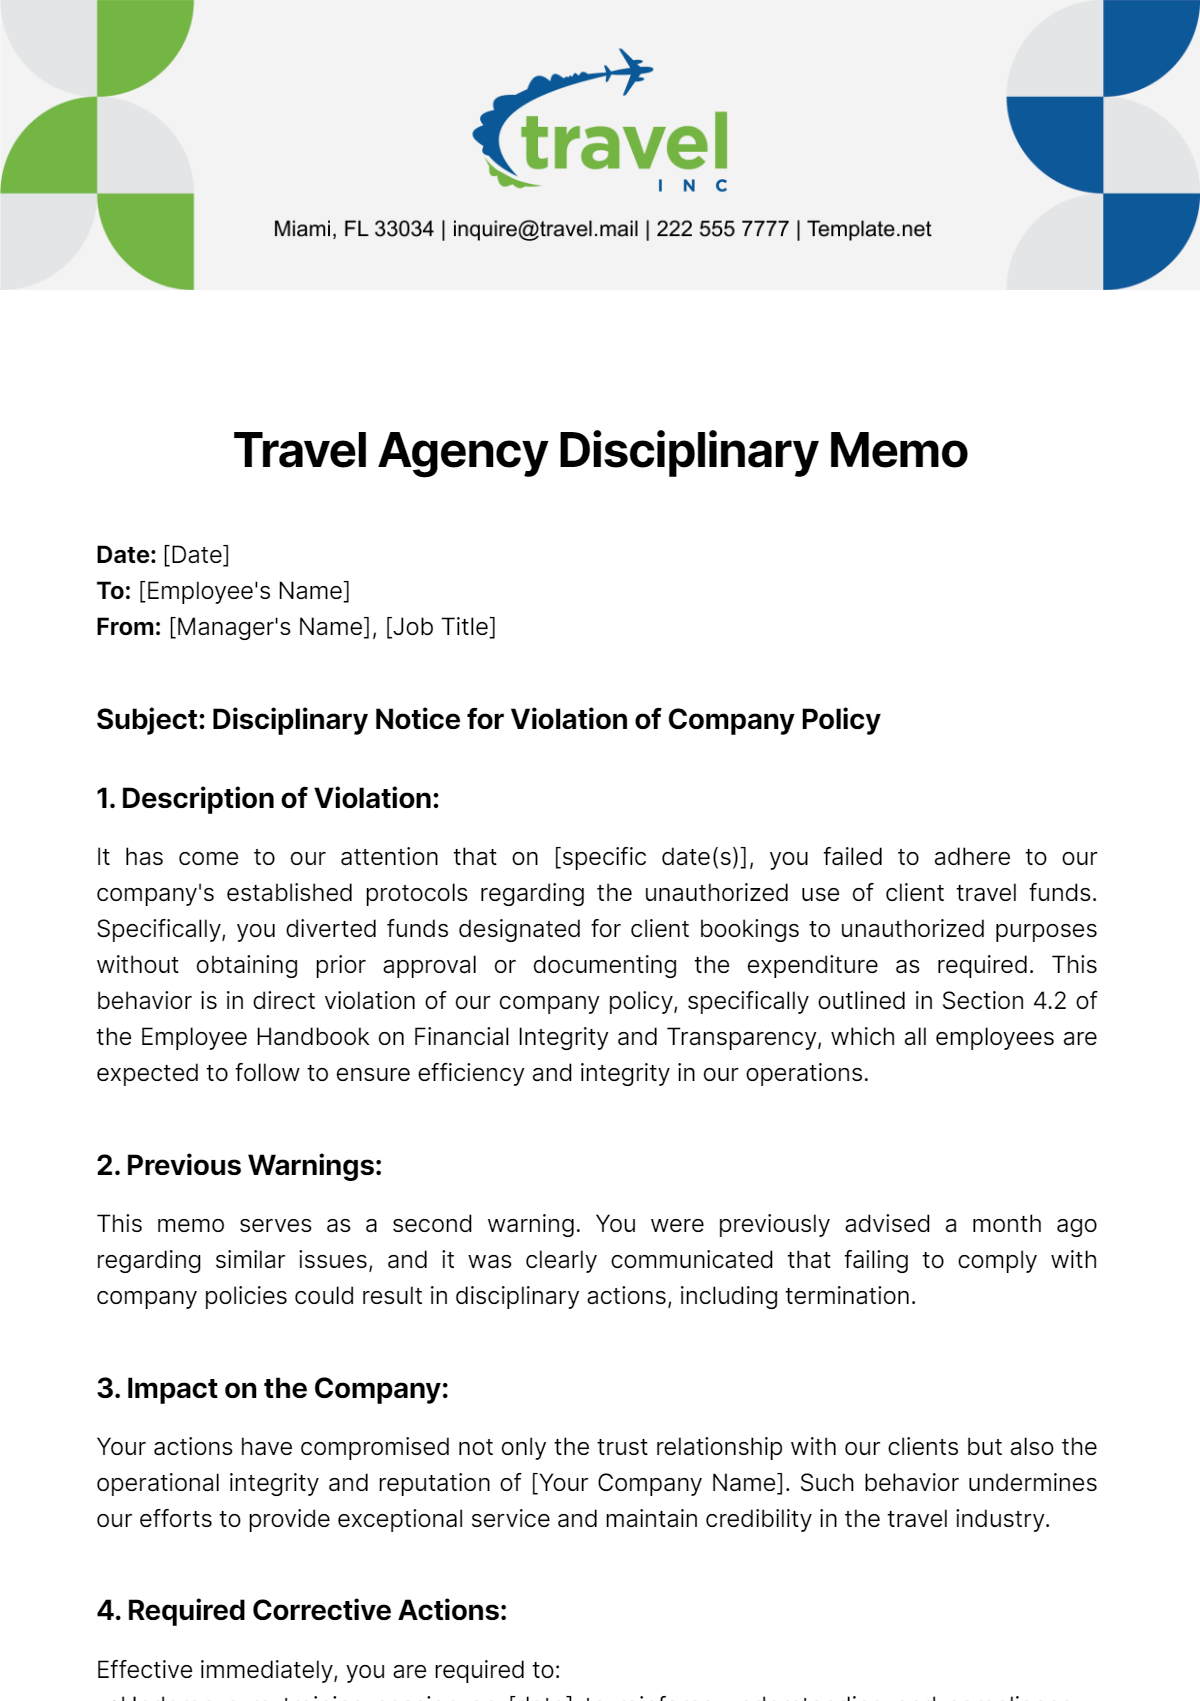 Travel Agency Disciplinary Memo Template